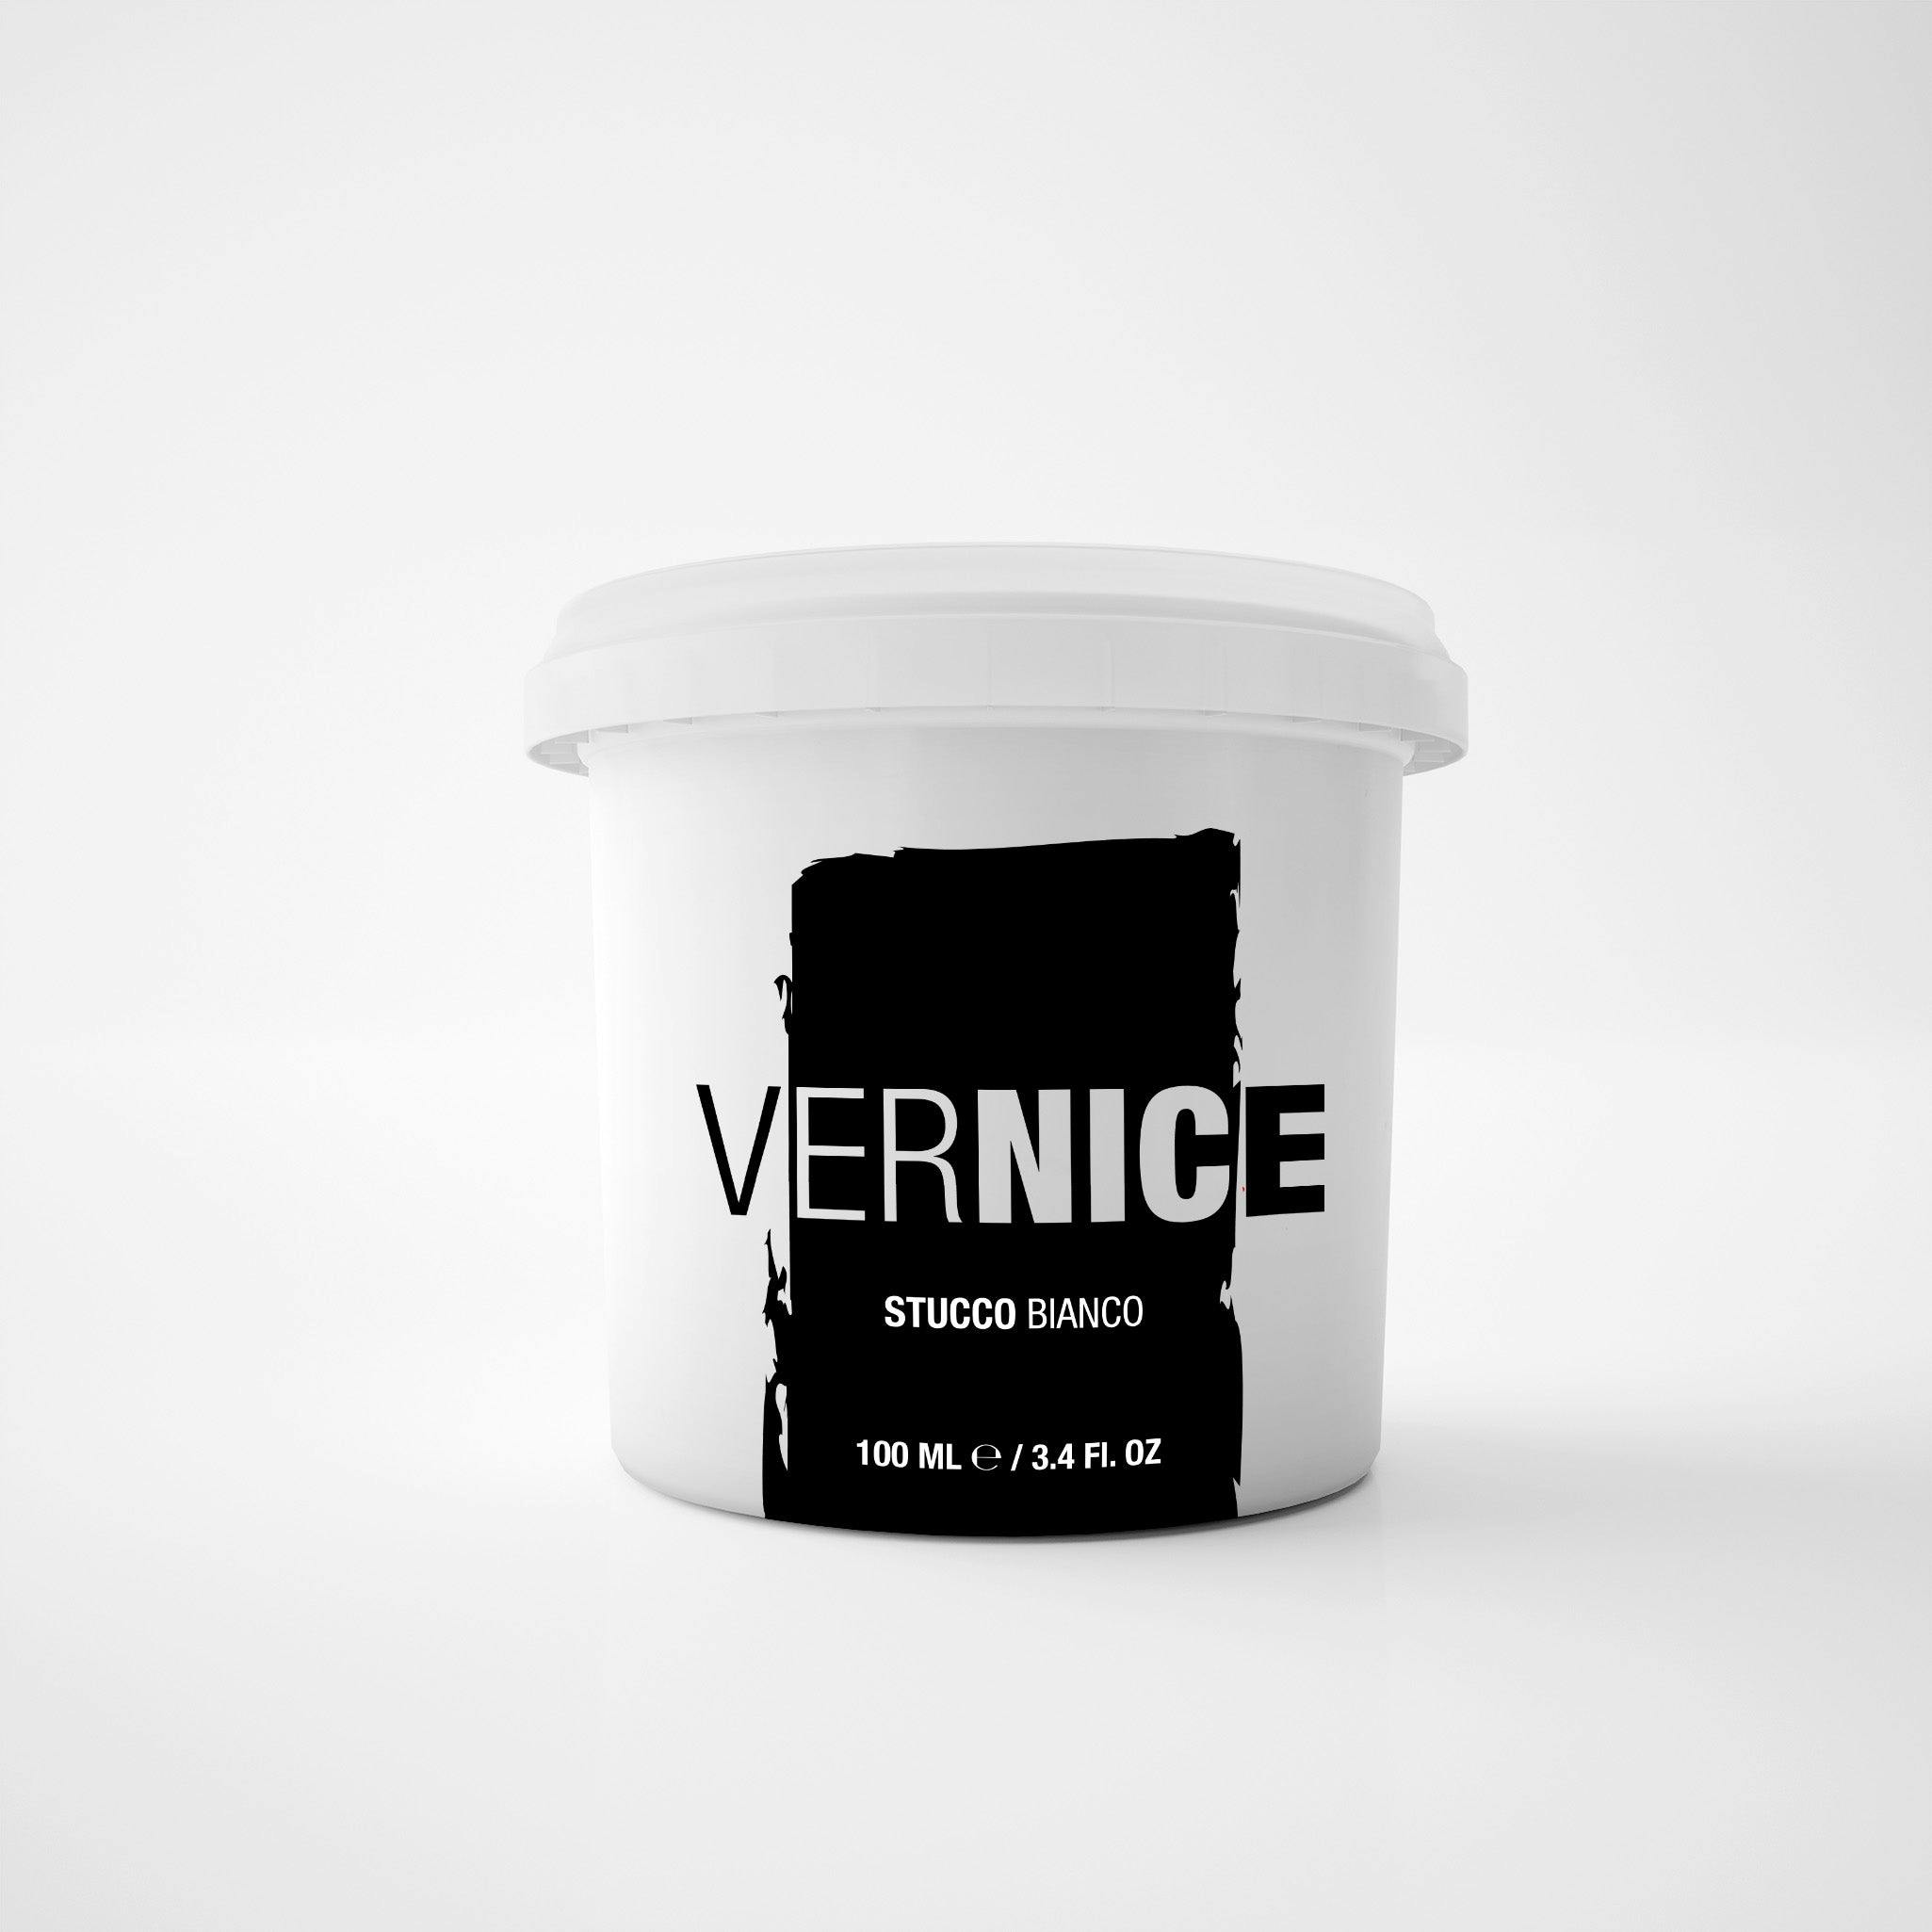 VERNICE Stucco Bianco (Spackling Paste, 100ml) + Stucco Card